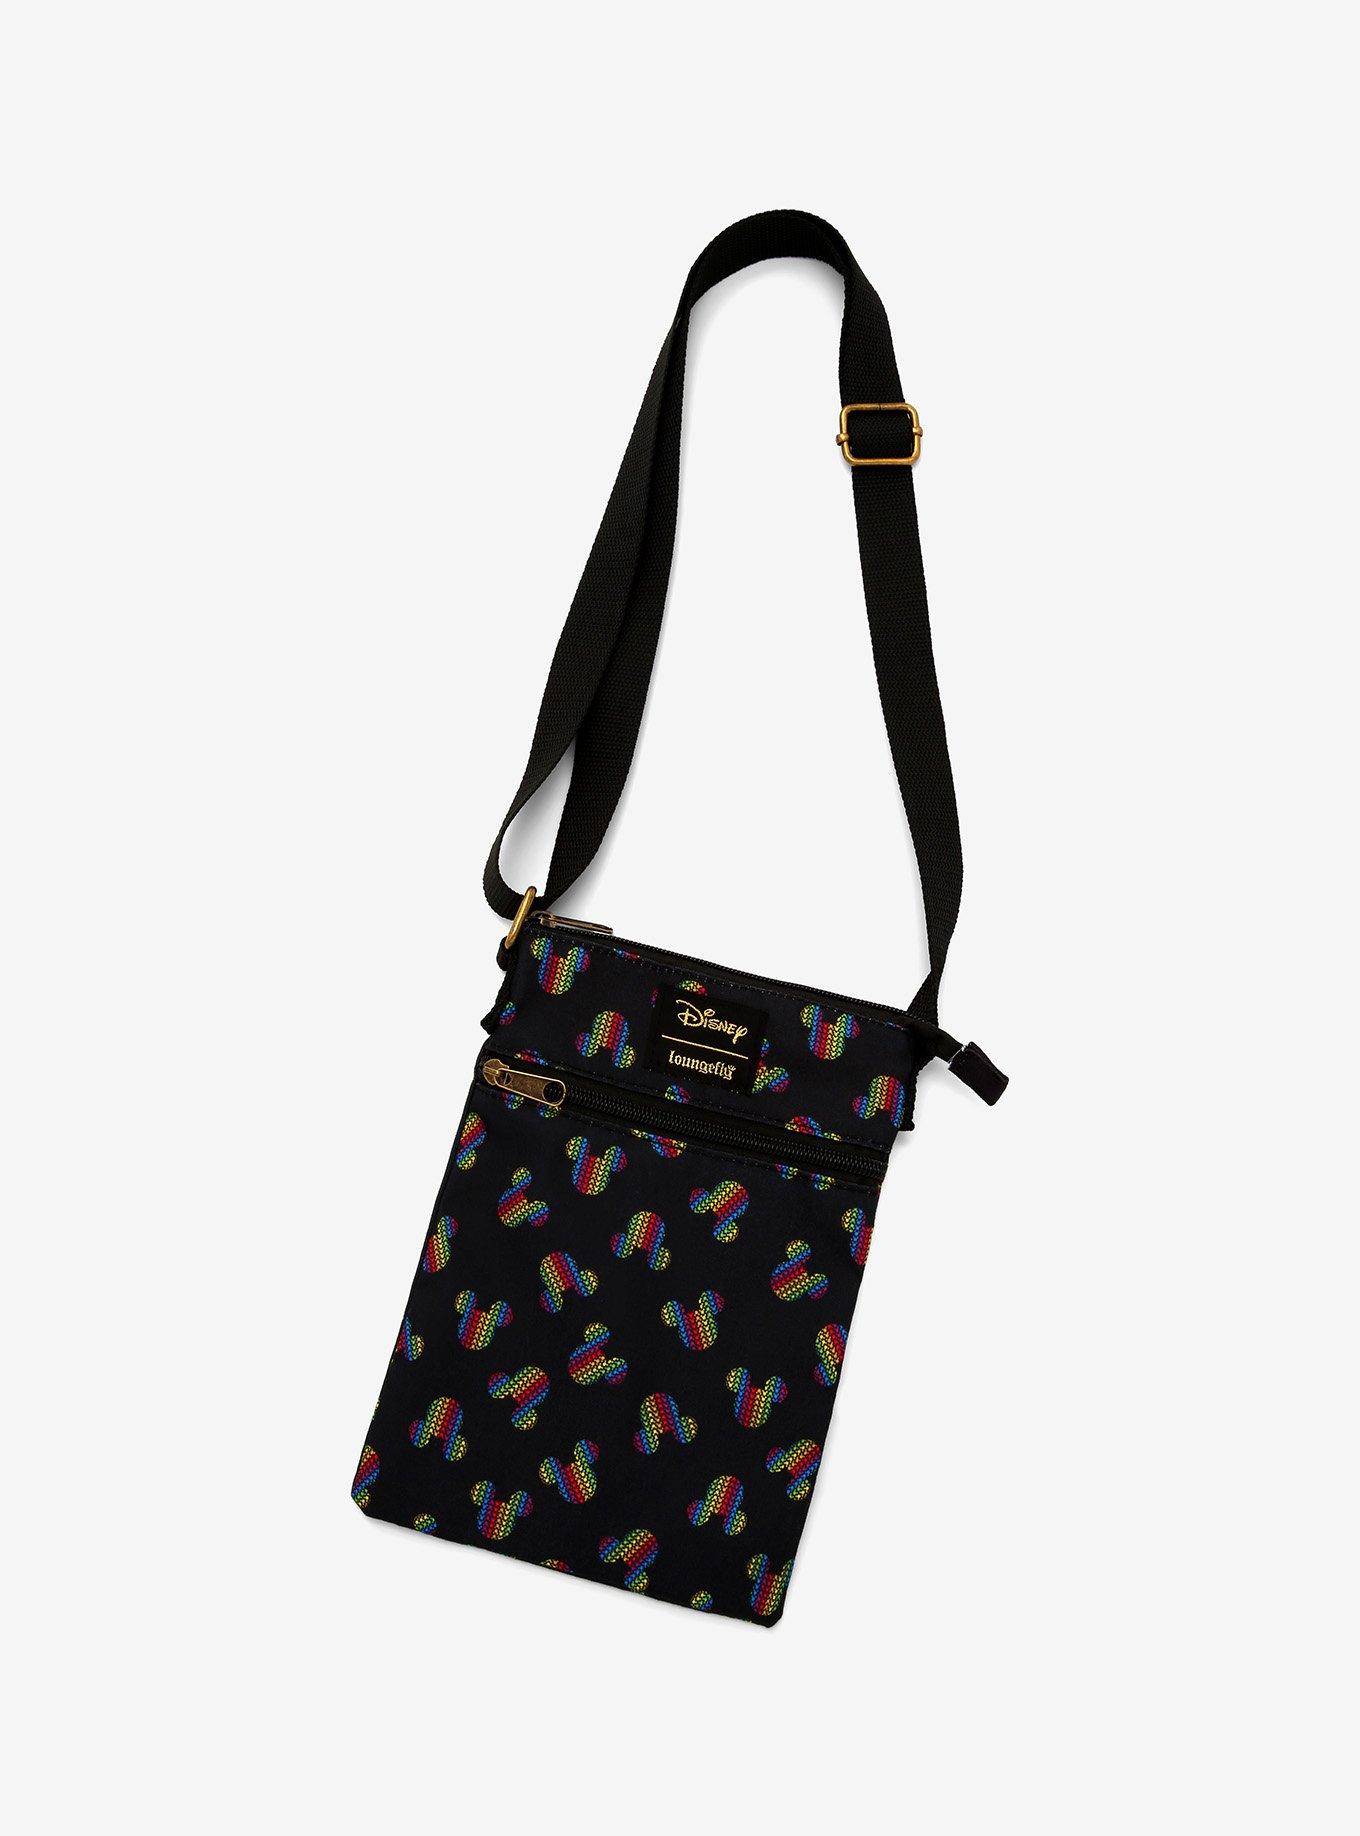 Selina-Jayne Fairies Limited Edition Designer Small Cross Body Shoulder Bag